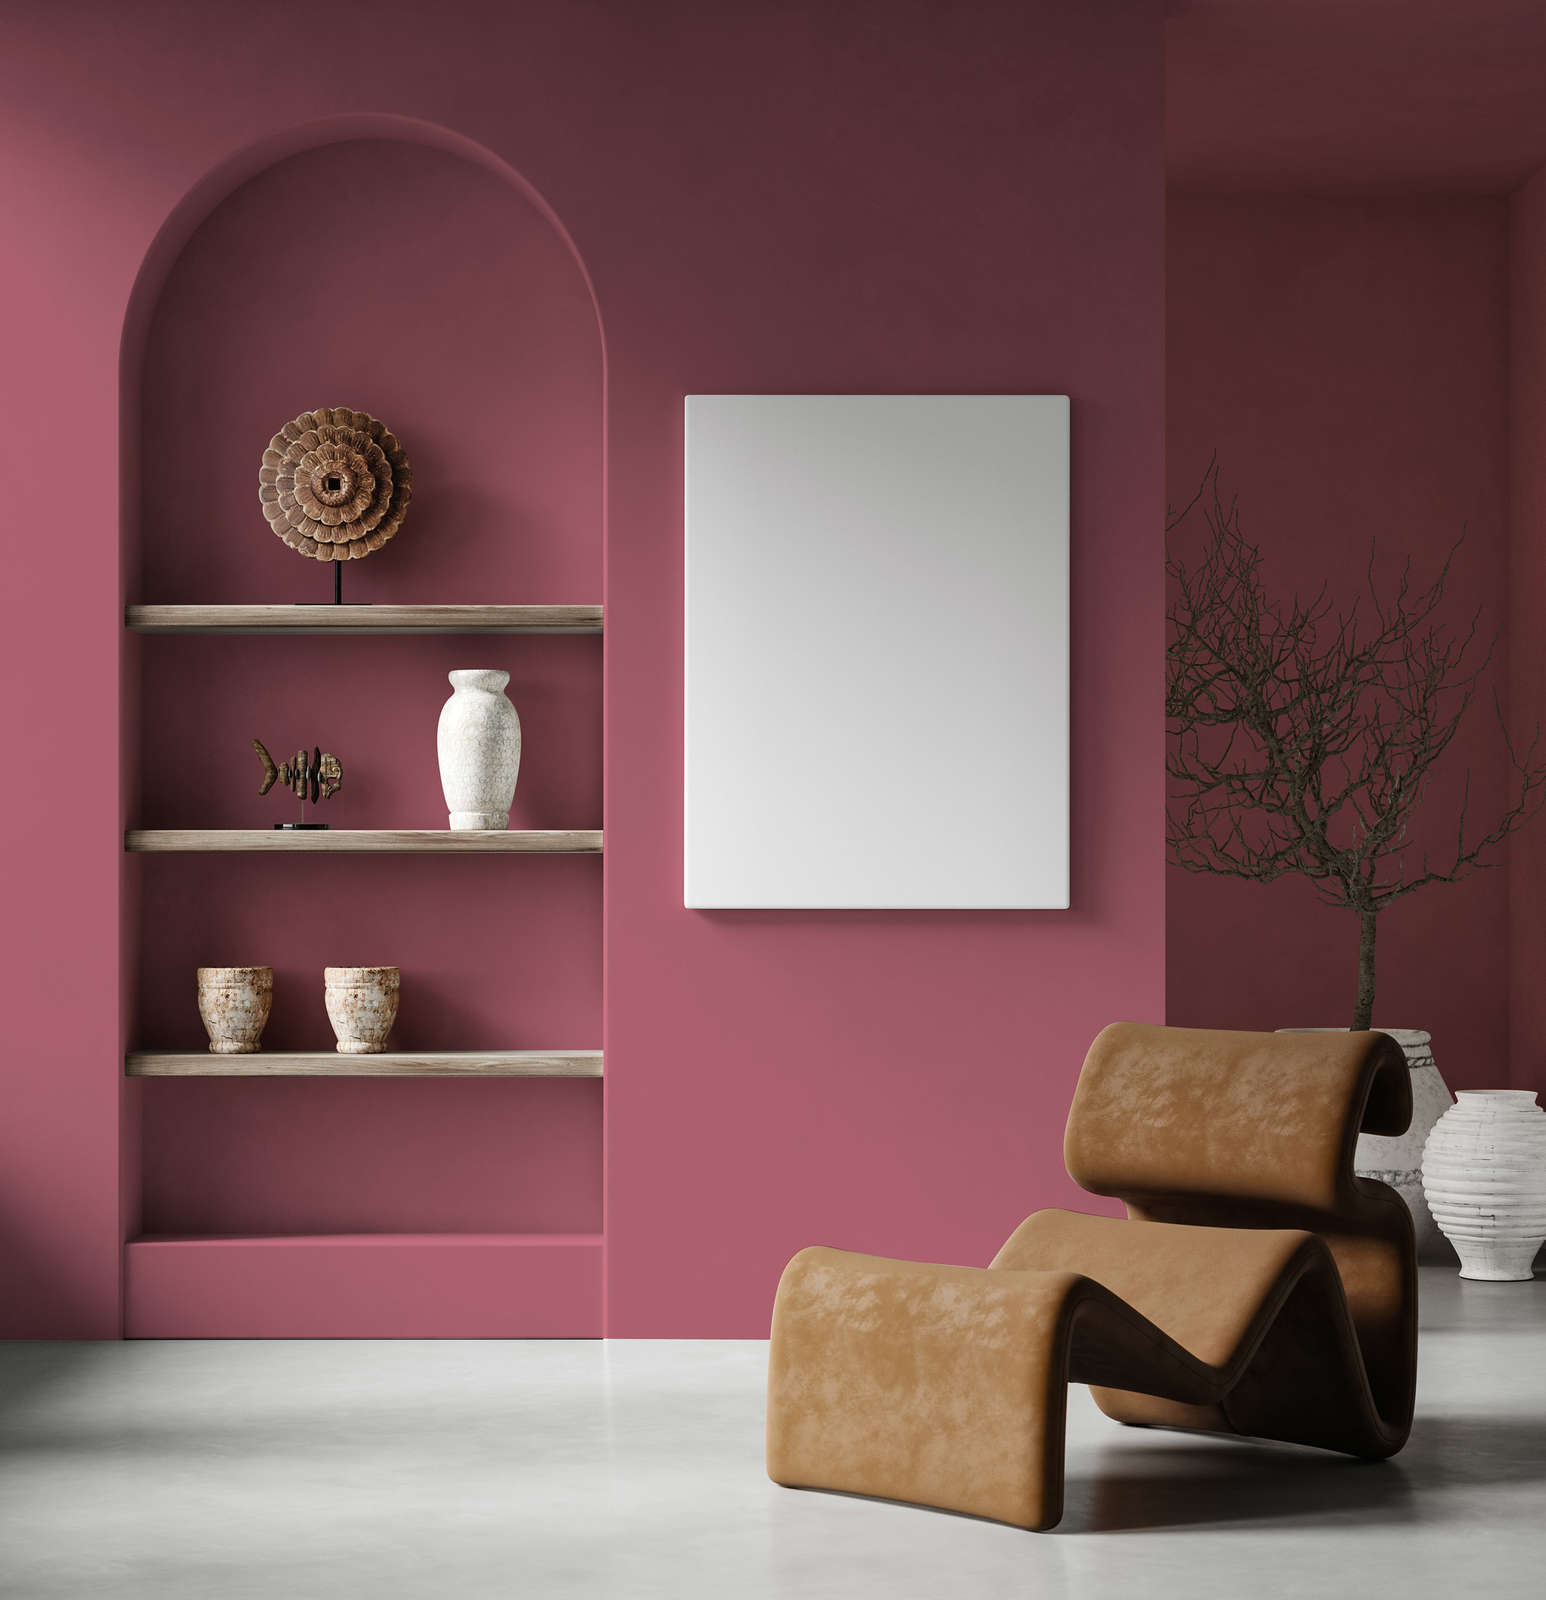             Pittura murale Premium Rosa scuro rinfrescante »Blooming Blossom« NW1018 – 1 litri
        